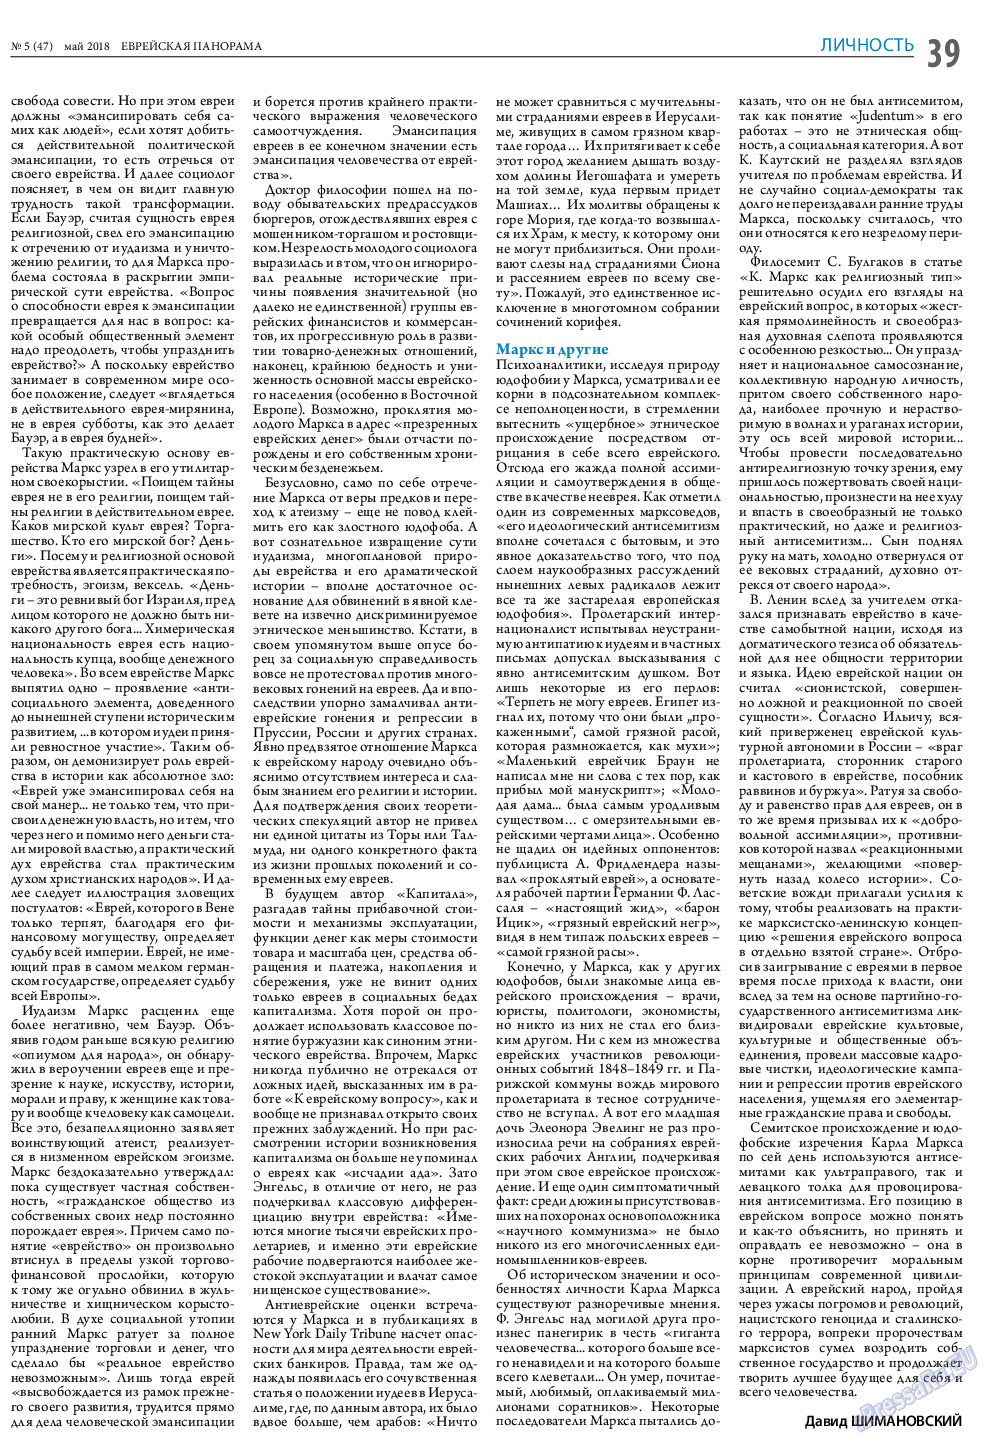 Еврейская панорама, газета. 2018 №5 стр.39